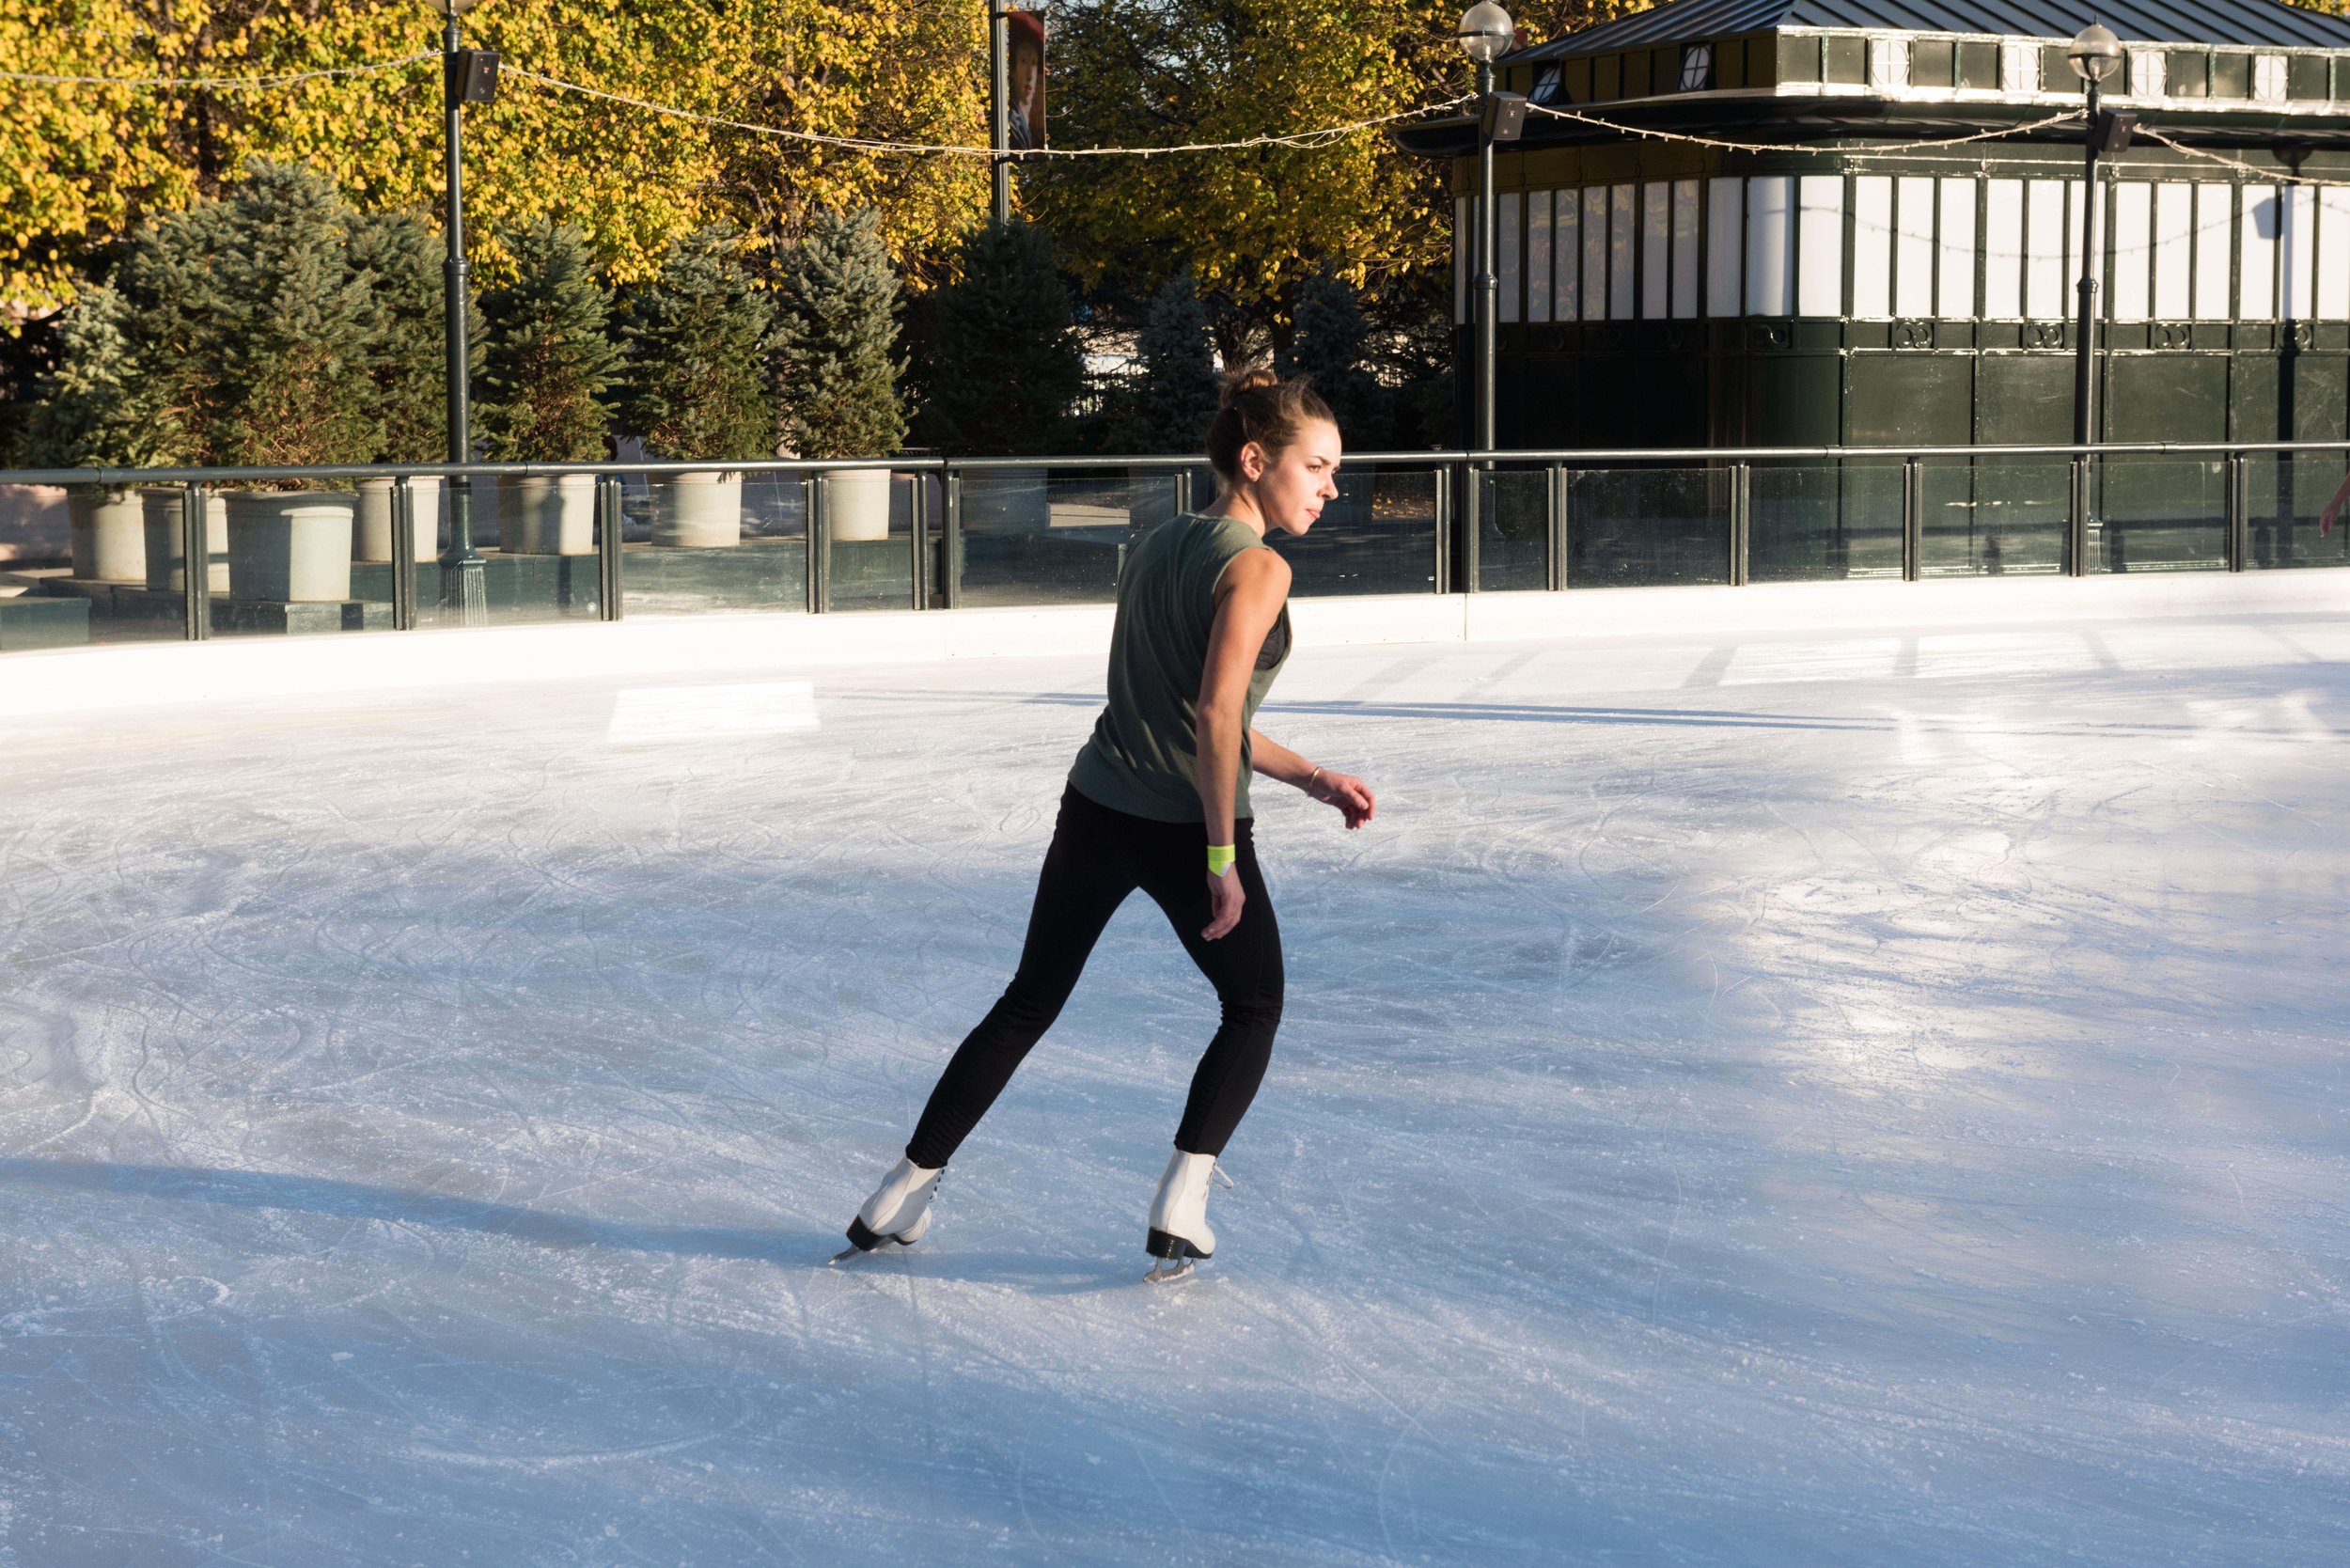 National Gallery Of Art Sculpture Garden Ice Skating Rink Dc